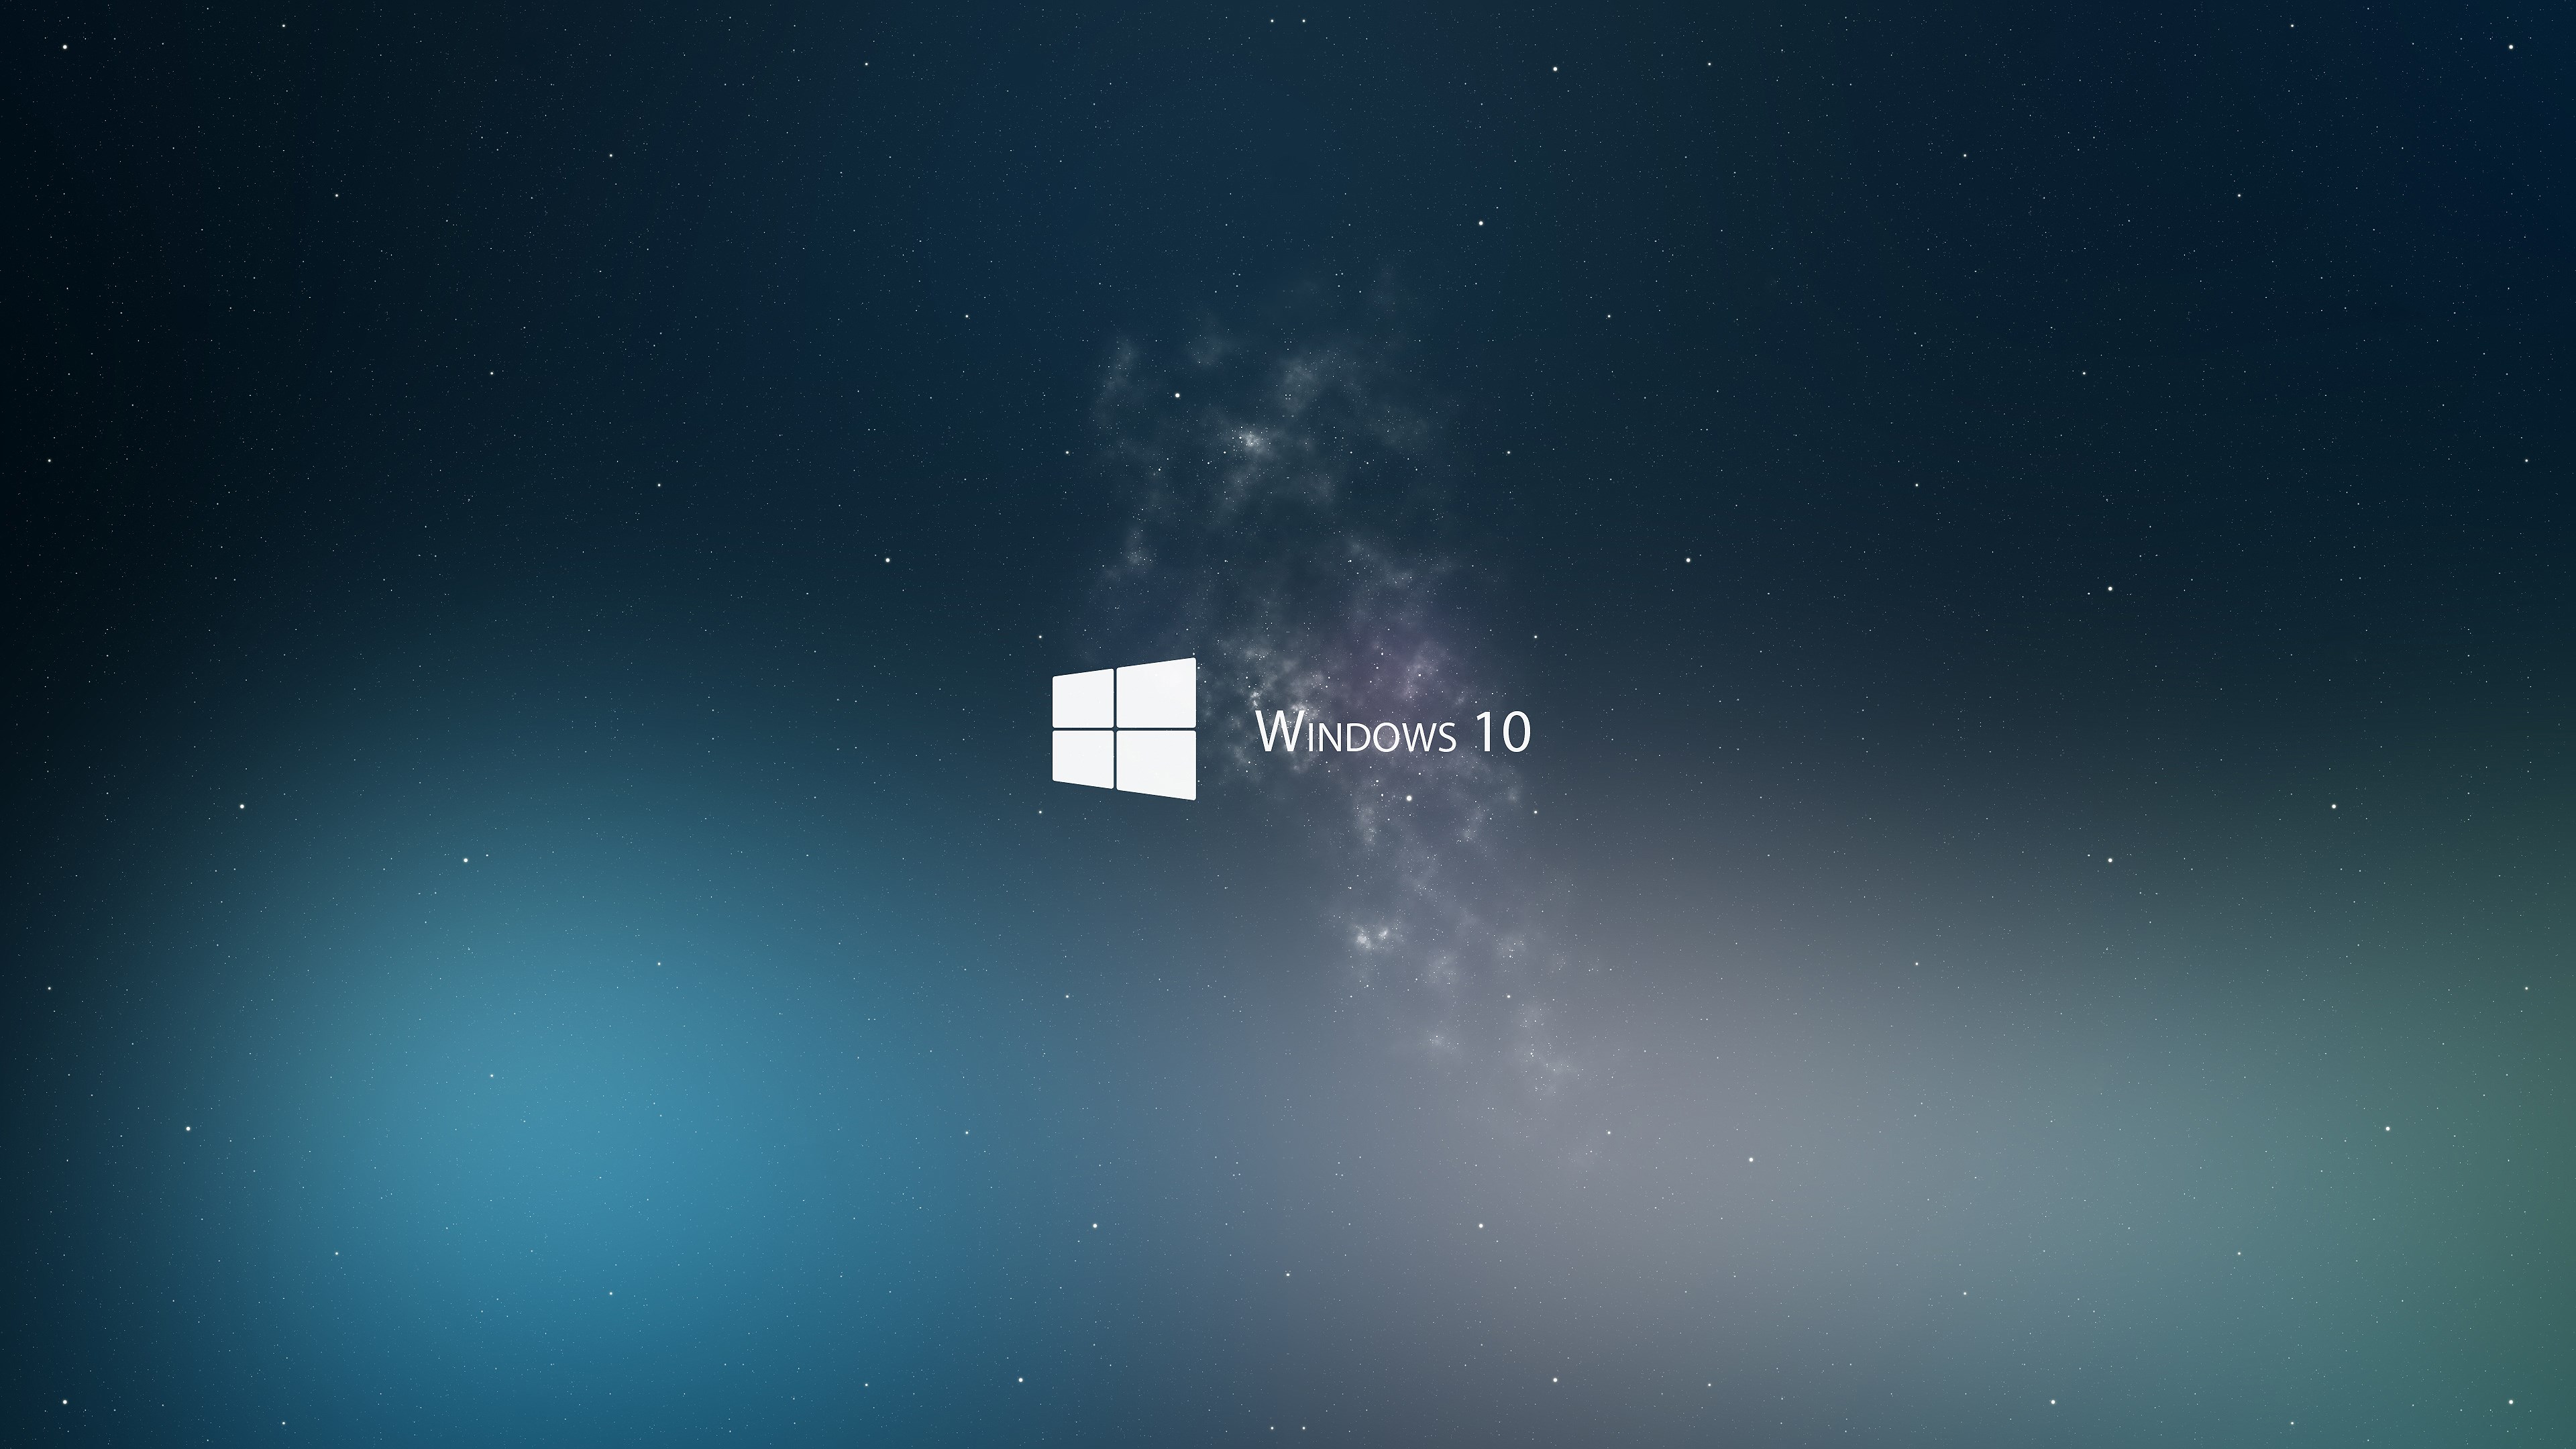 Windows 10 4K Wallpapers   Ultra HD Top 15